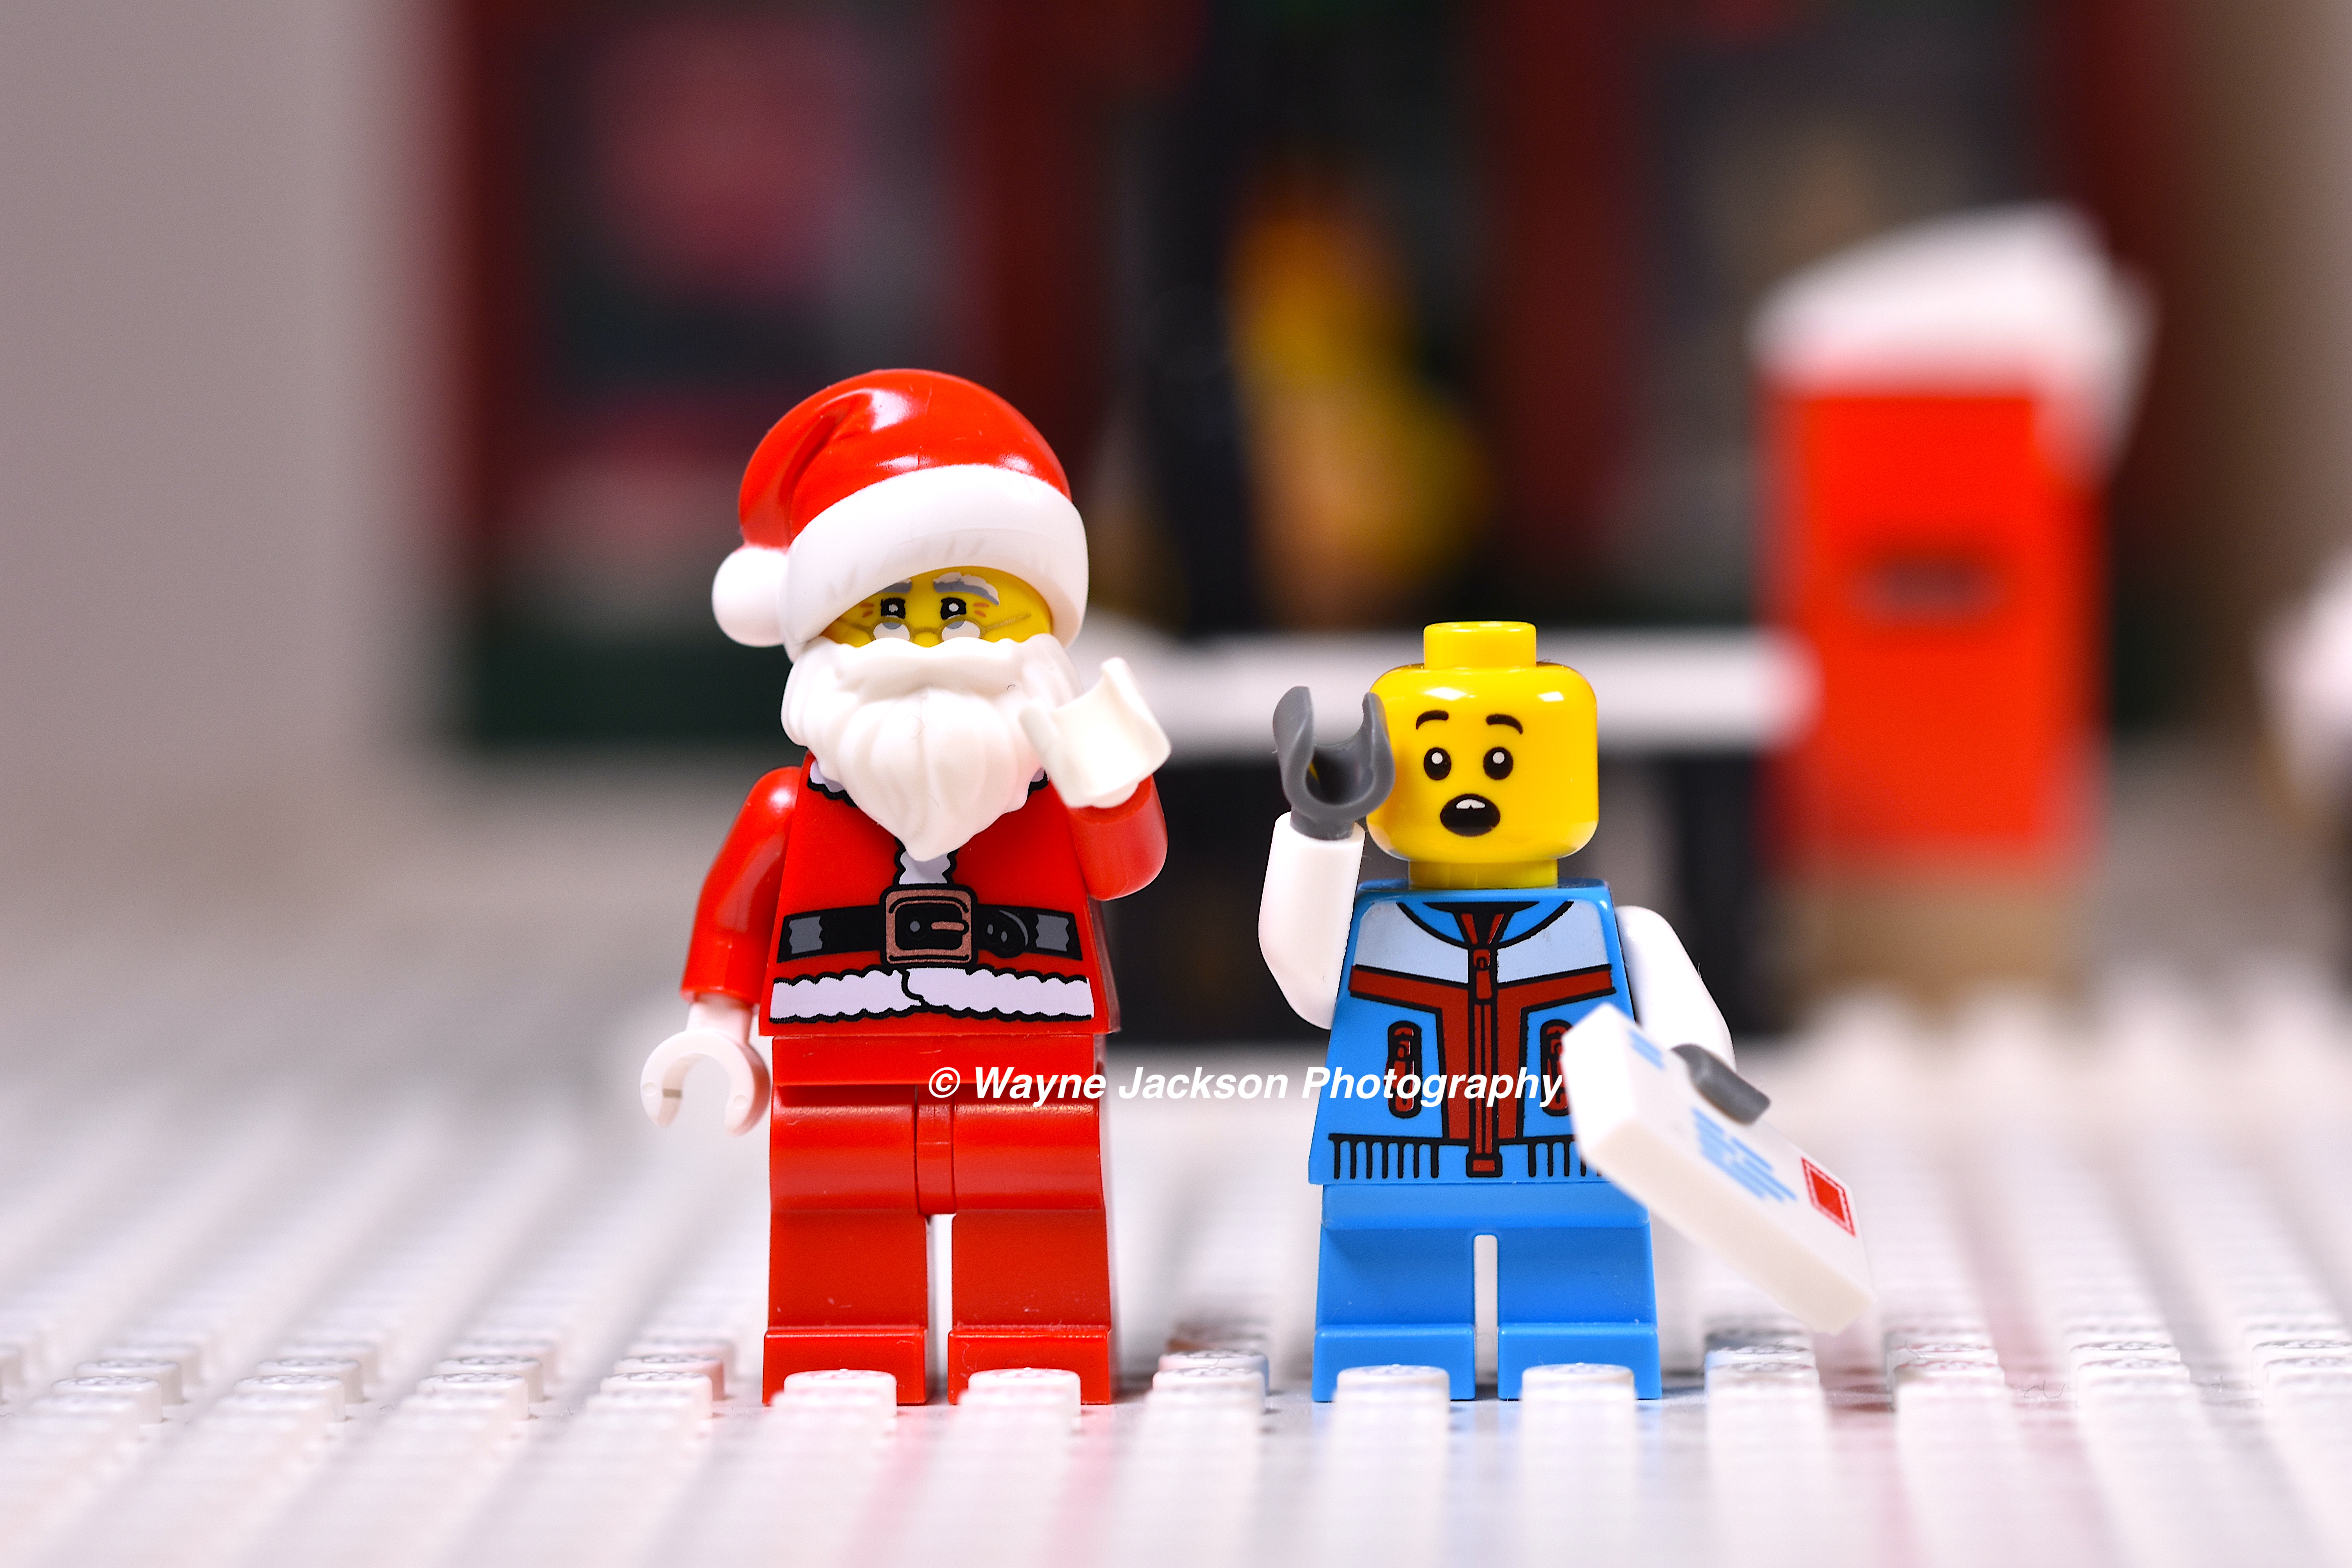 Two Lego minifigures including Santa